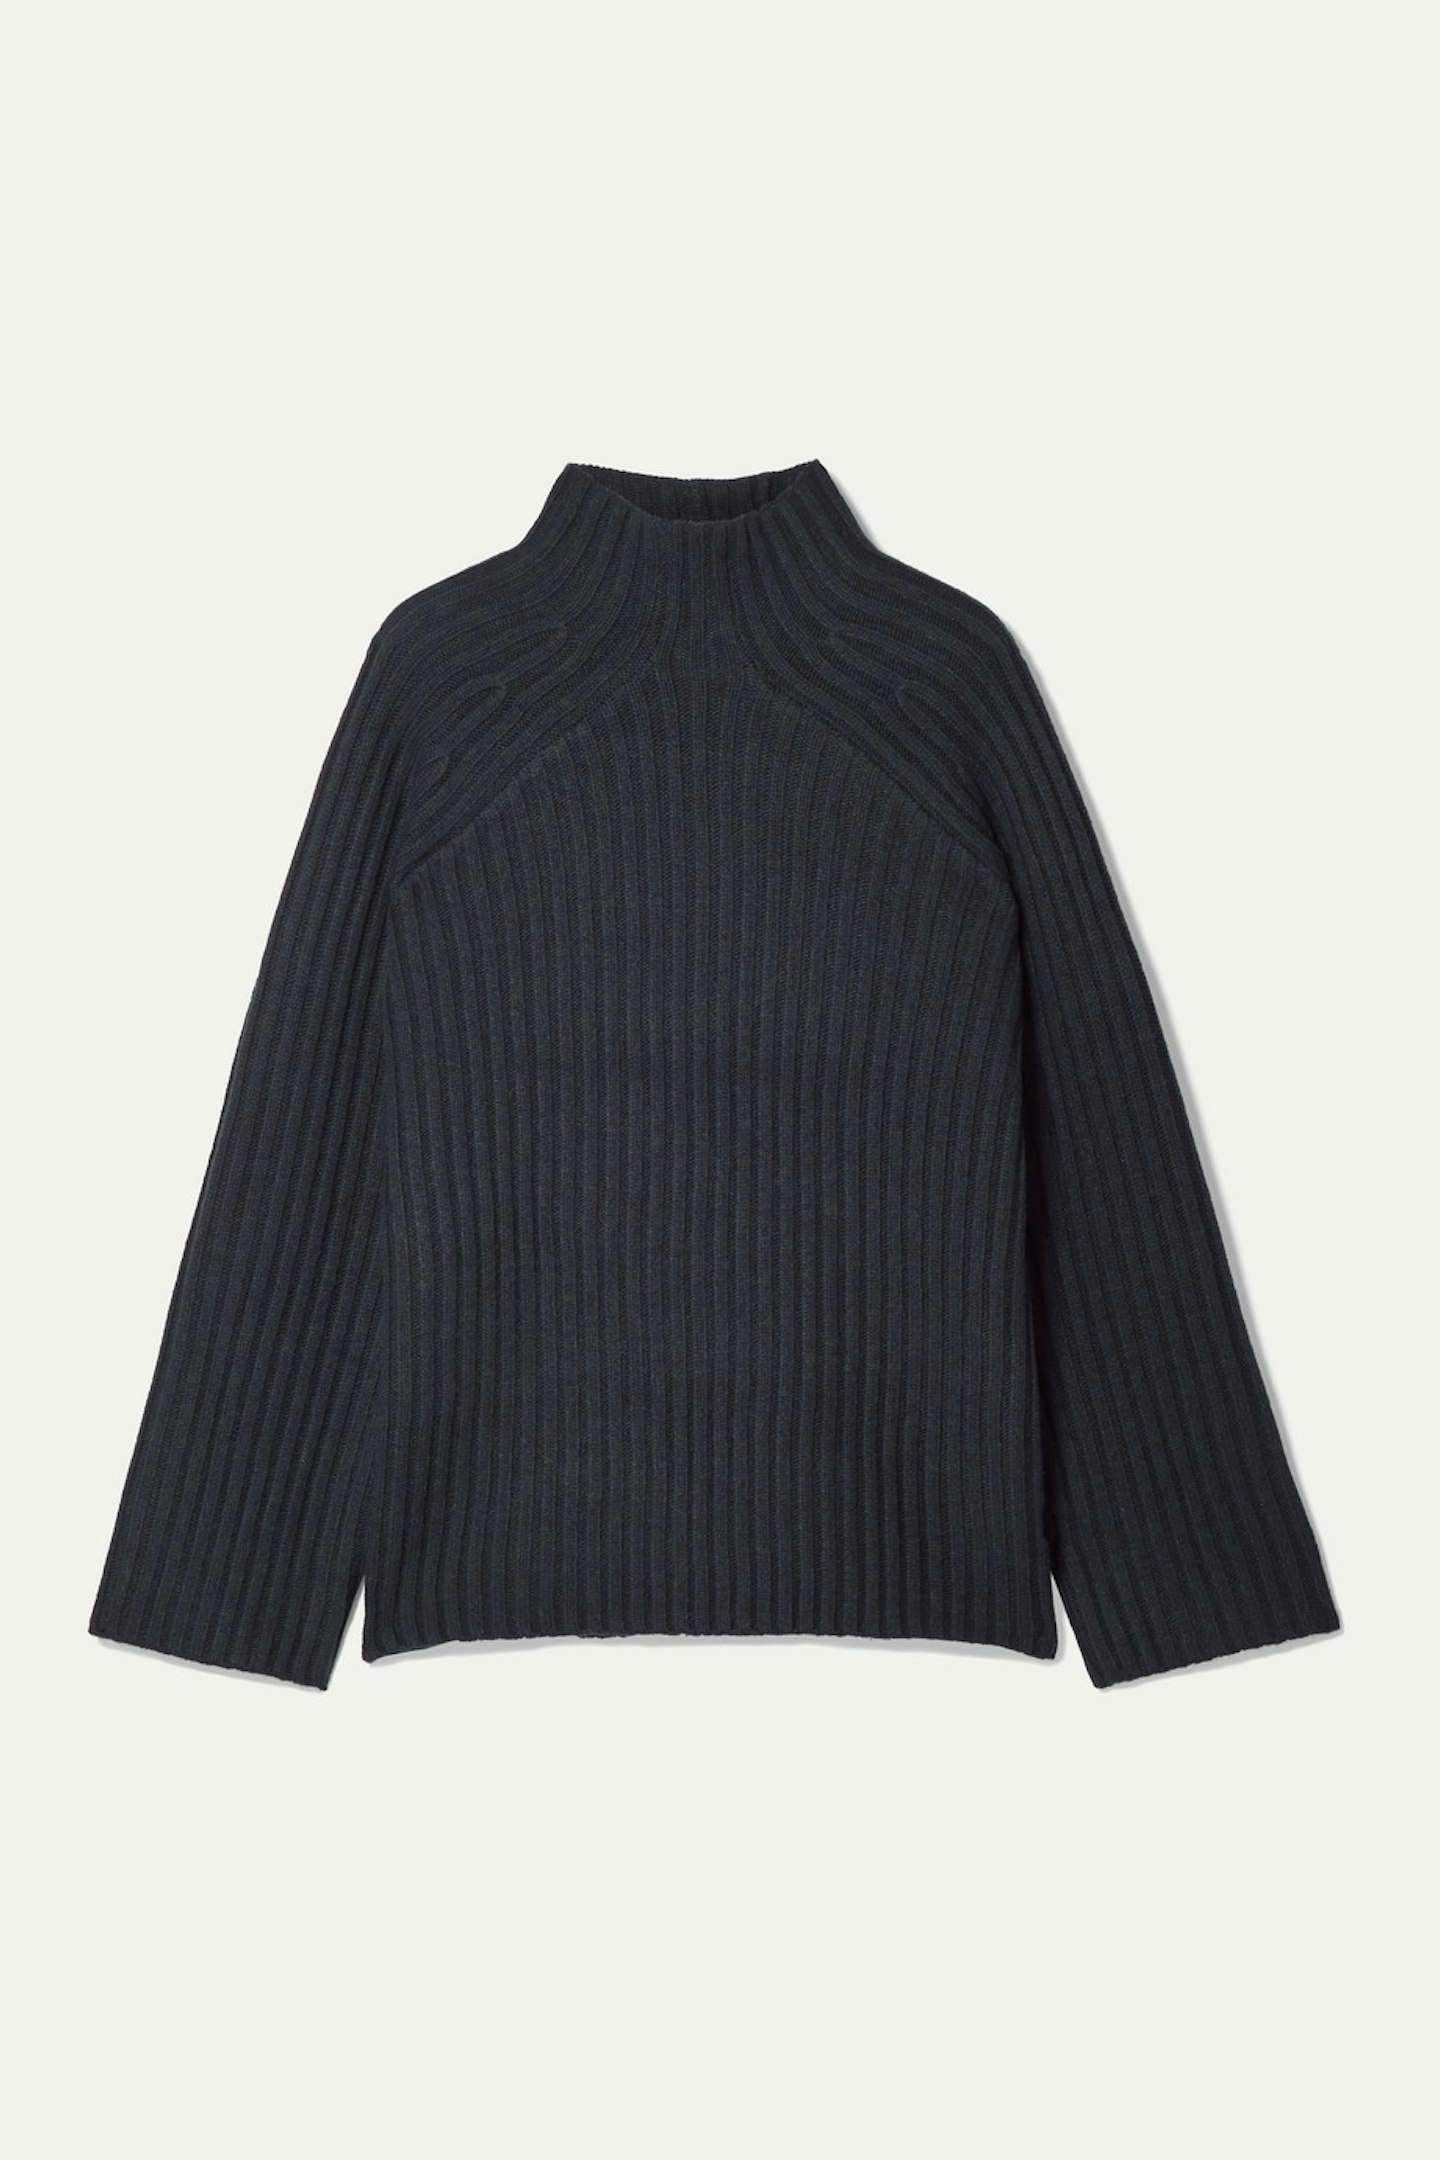 By Malene Birger, Oversized Ribbed Wool-blend Turtleneck Sweater, £230